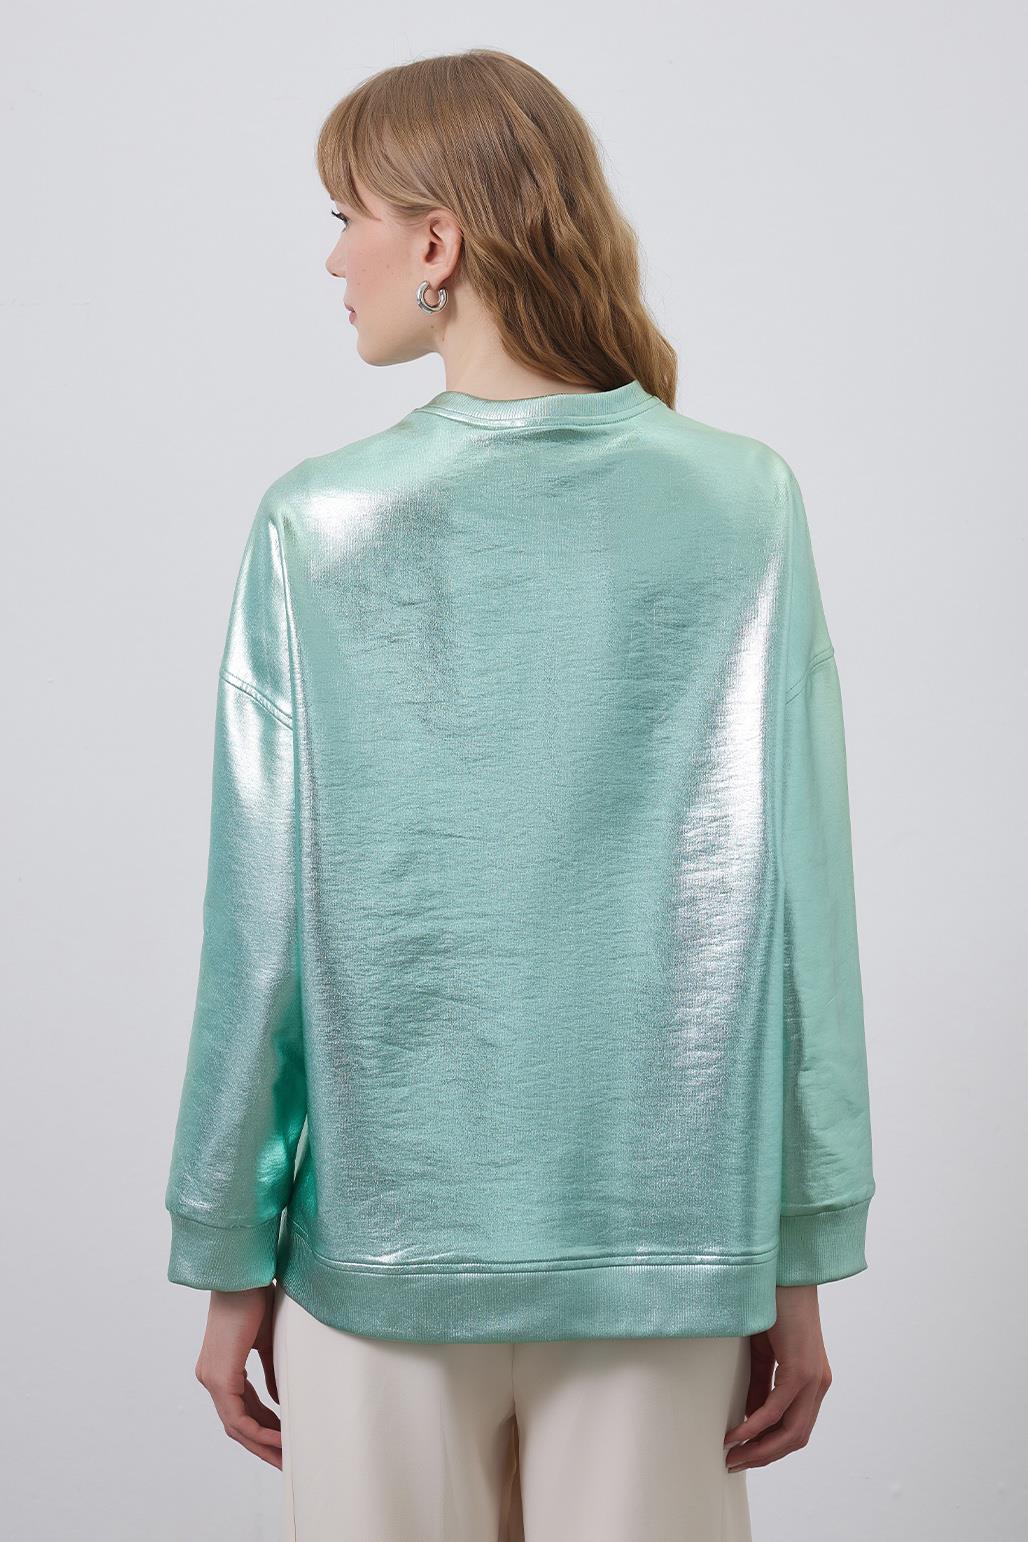 Parlak Basic Sweatshirt Hologram Yeşili